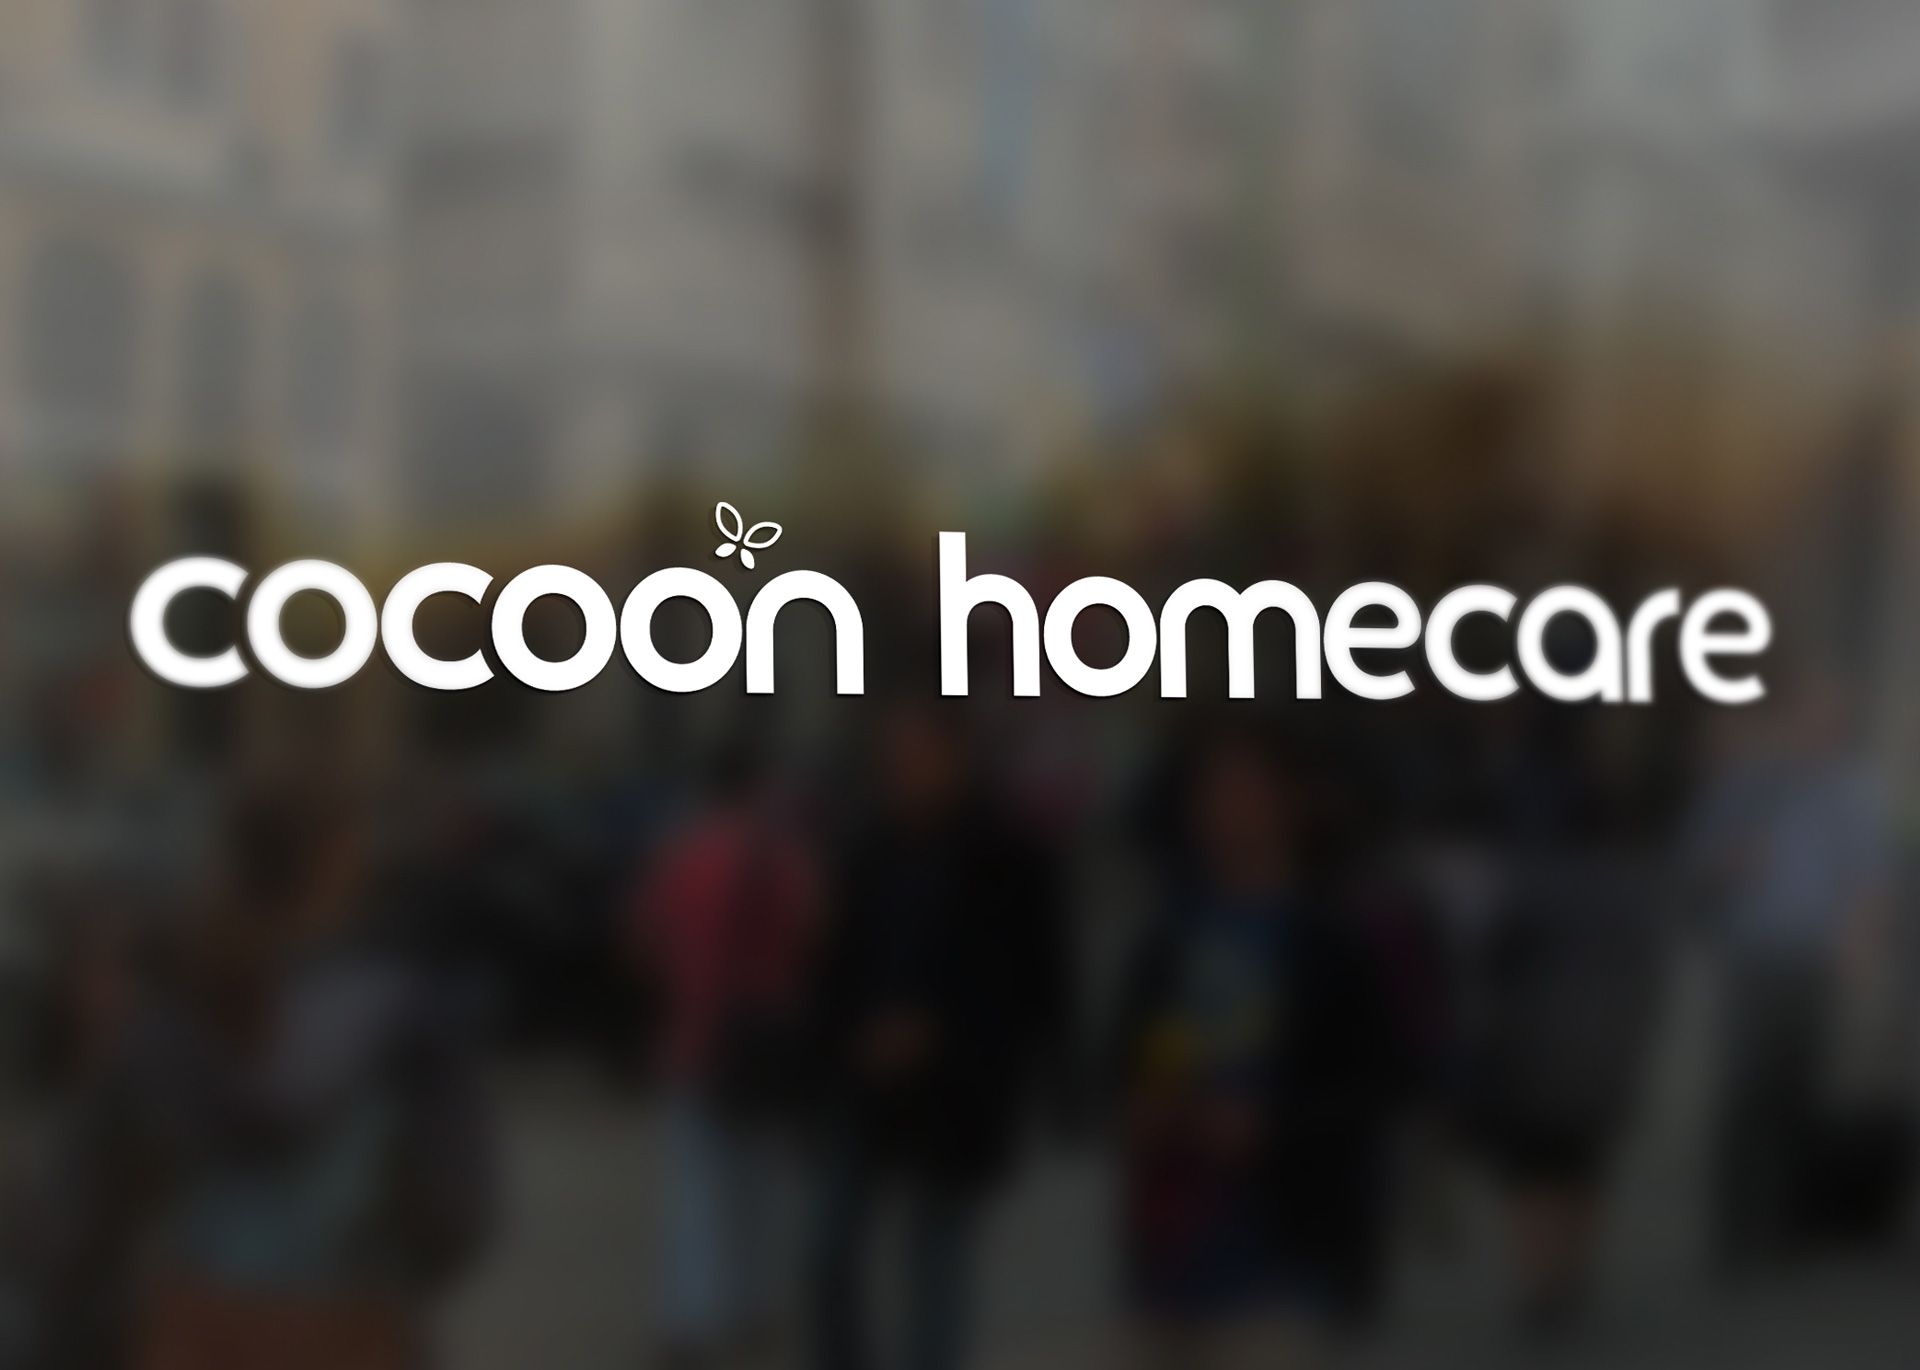 1_Cocoon_Glass_Logo